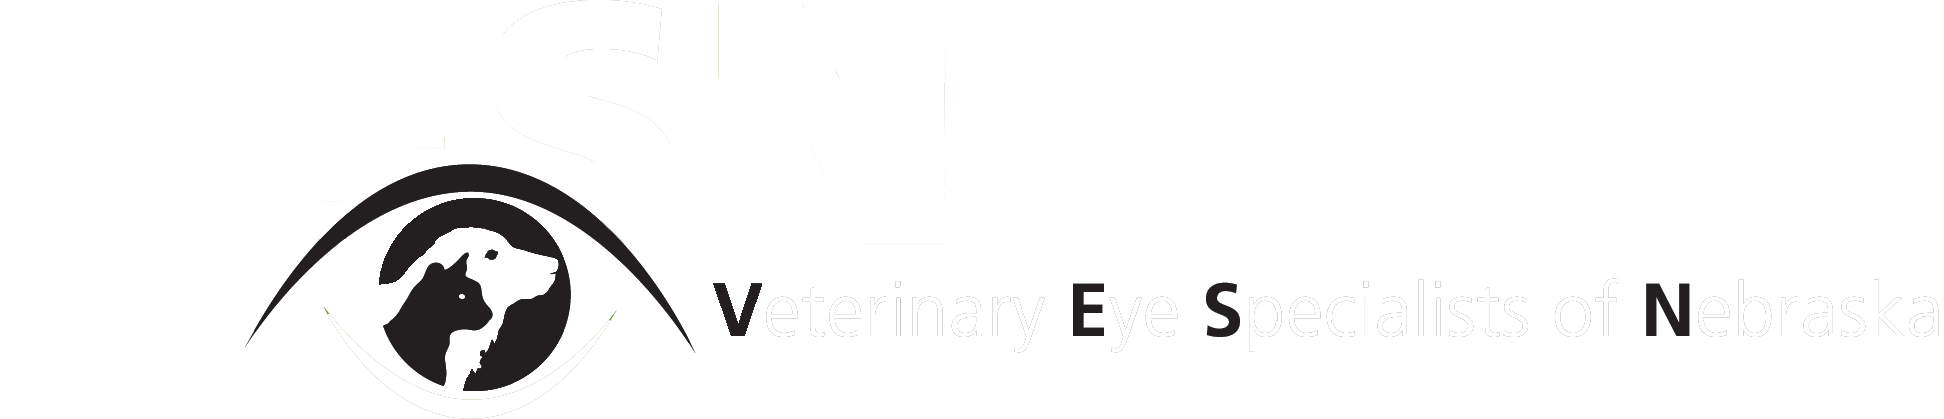 Veterinary Eye Specialists of Nebraska